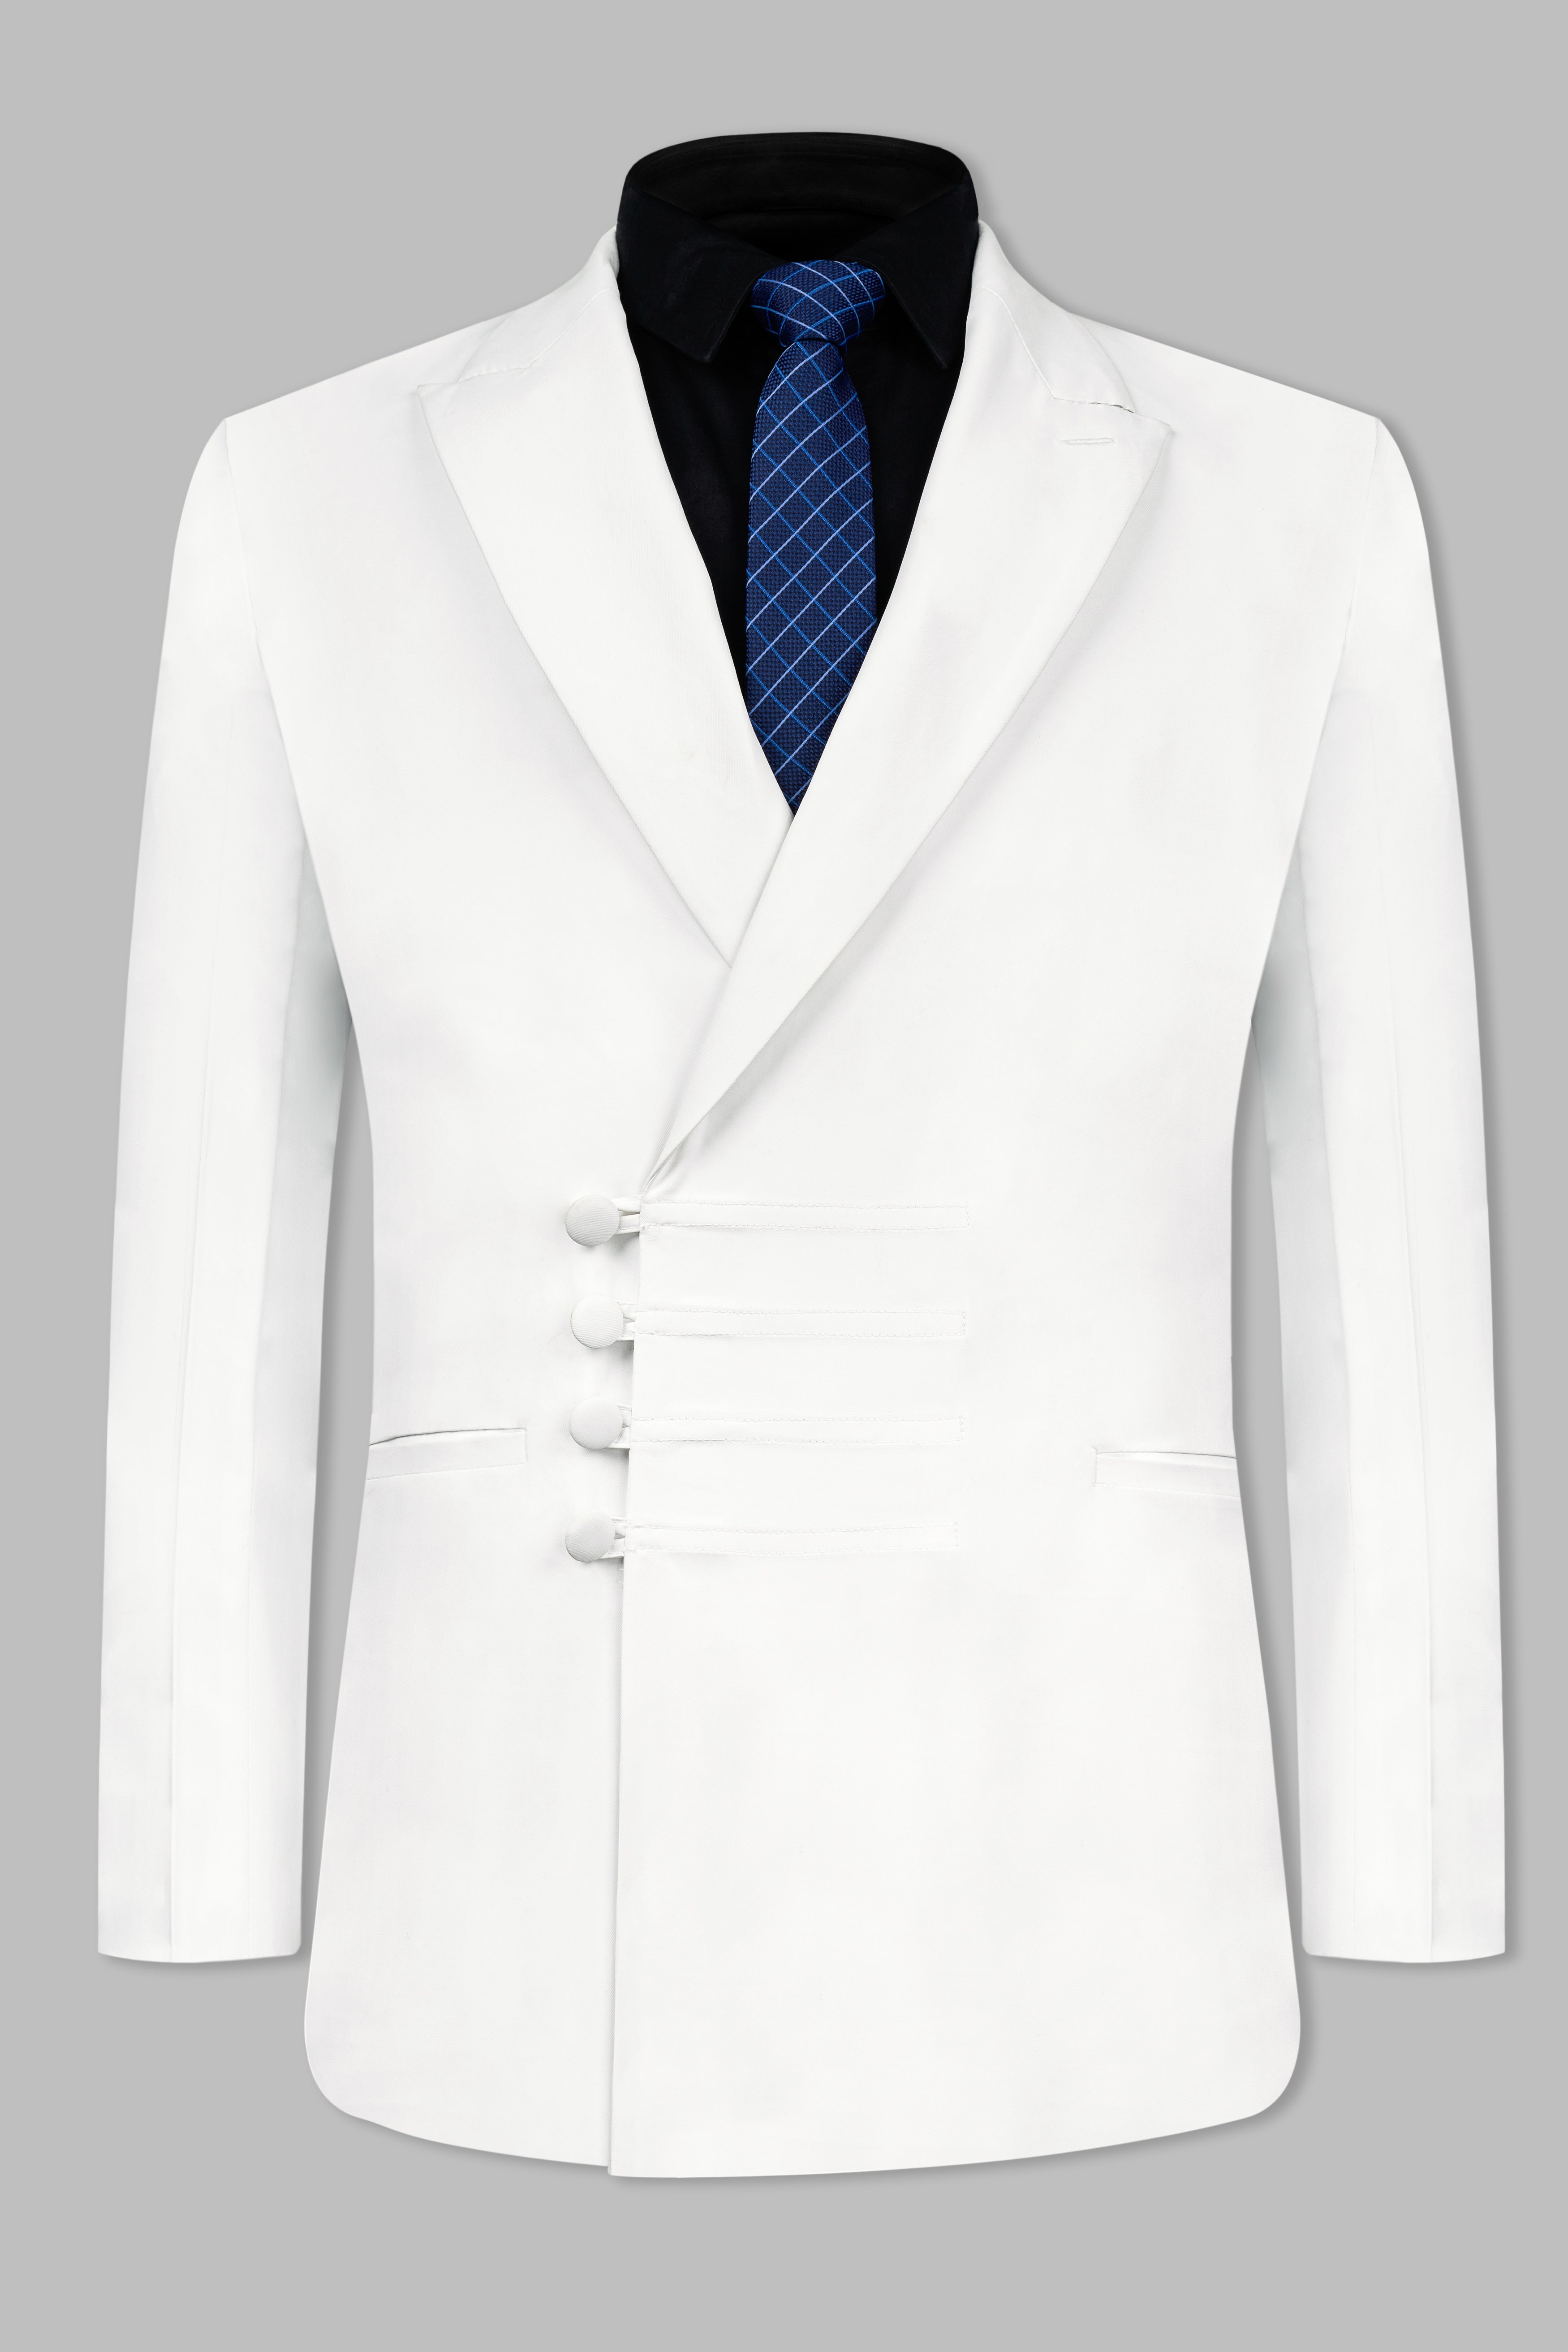 Bright White Wool Rich Designer Suit ST2798-SBP-FB-D272-36,ST2798-SBP-FB-D272-38,ST2798-SBP-FB-D272-40,ST2798-SBP-FB-D272-42,ST2798-SBP-FB-D272-44,ST2798-SBP-FB-D272-46,ST2798-SBP-FB-D272-48,ST2798-SBP-FB-D272-50,ST2798-SBP-FB-D272-52,ST2798-SBP-FB-D272-54,ST2798-SBP-FB-D272-56,ST2798-SBP-FB-D272-58,ST2798-SBP-FB-D272-60